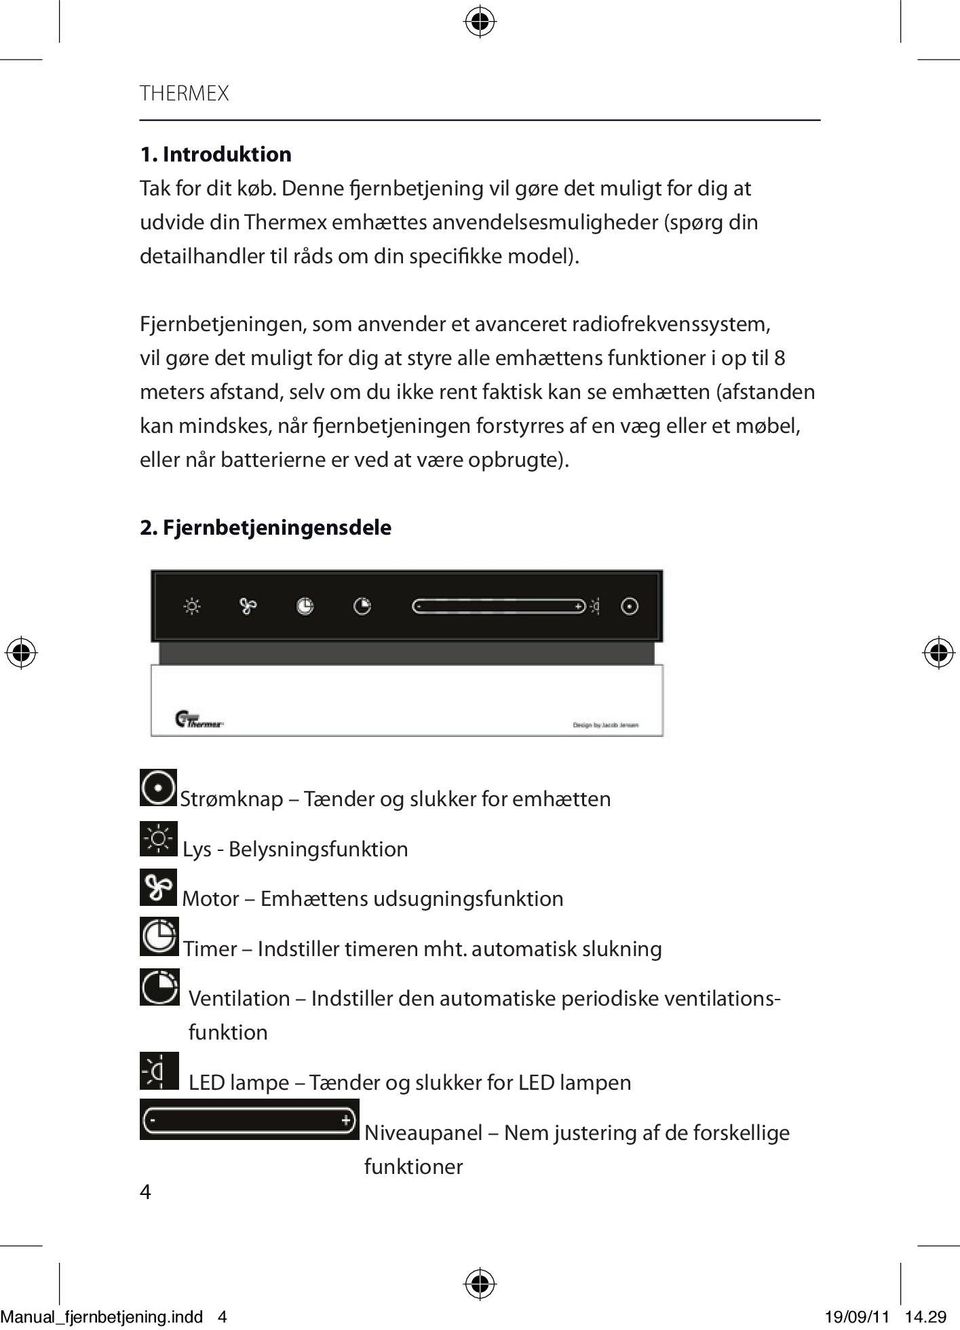 Thermex Fjernbetjening - PDF Gratis download